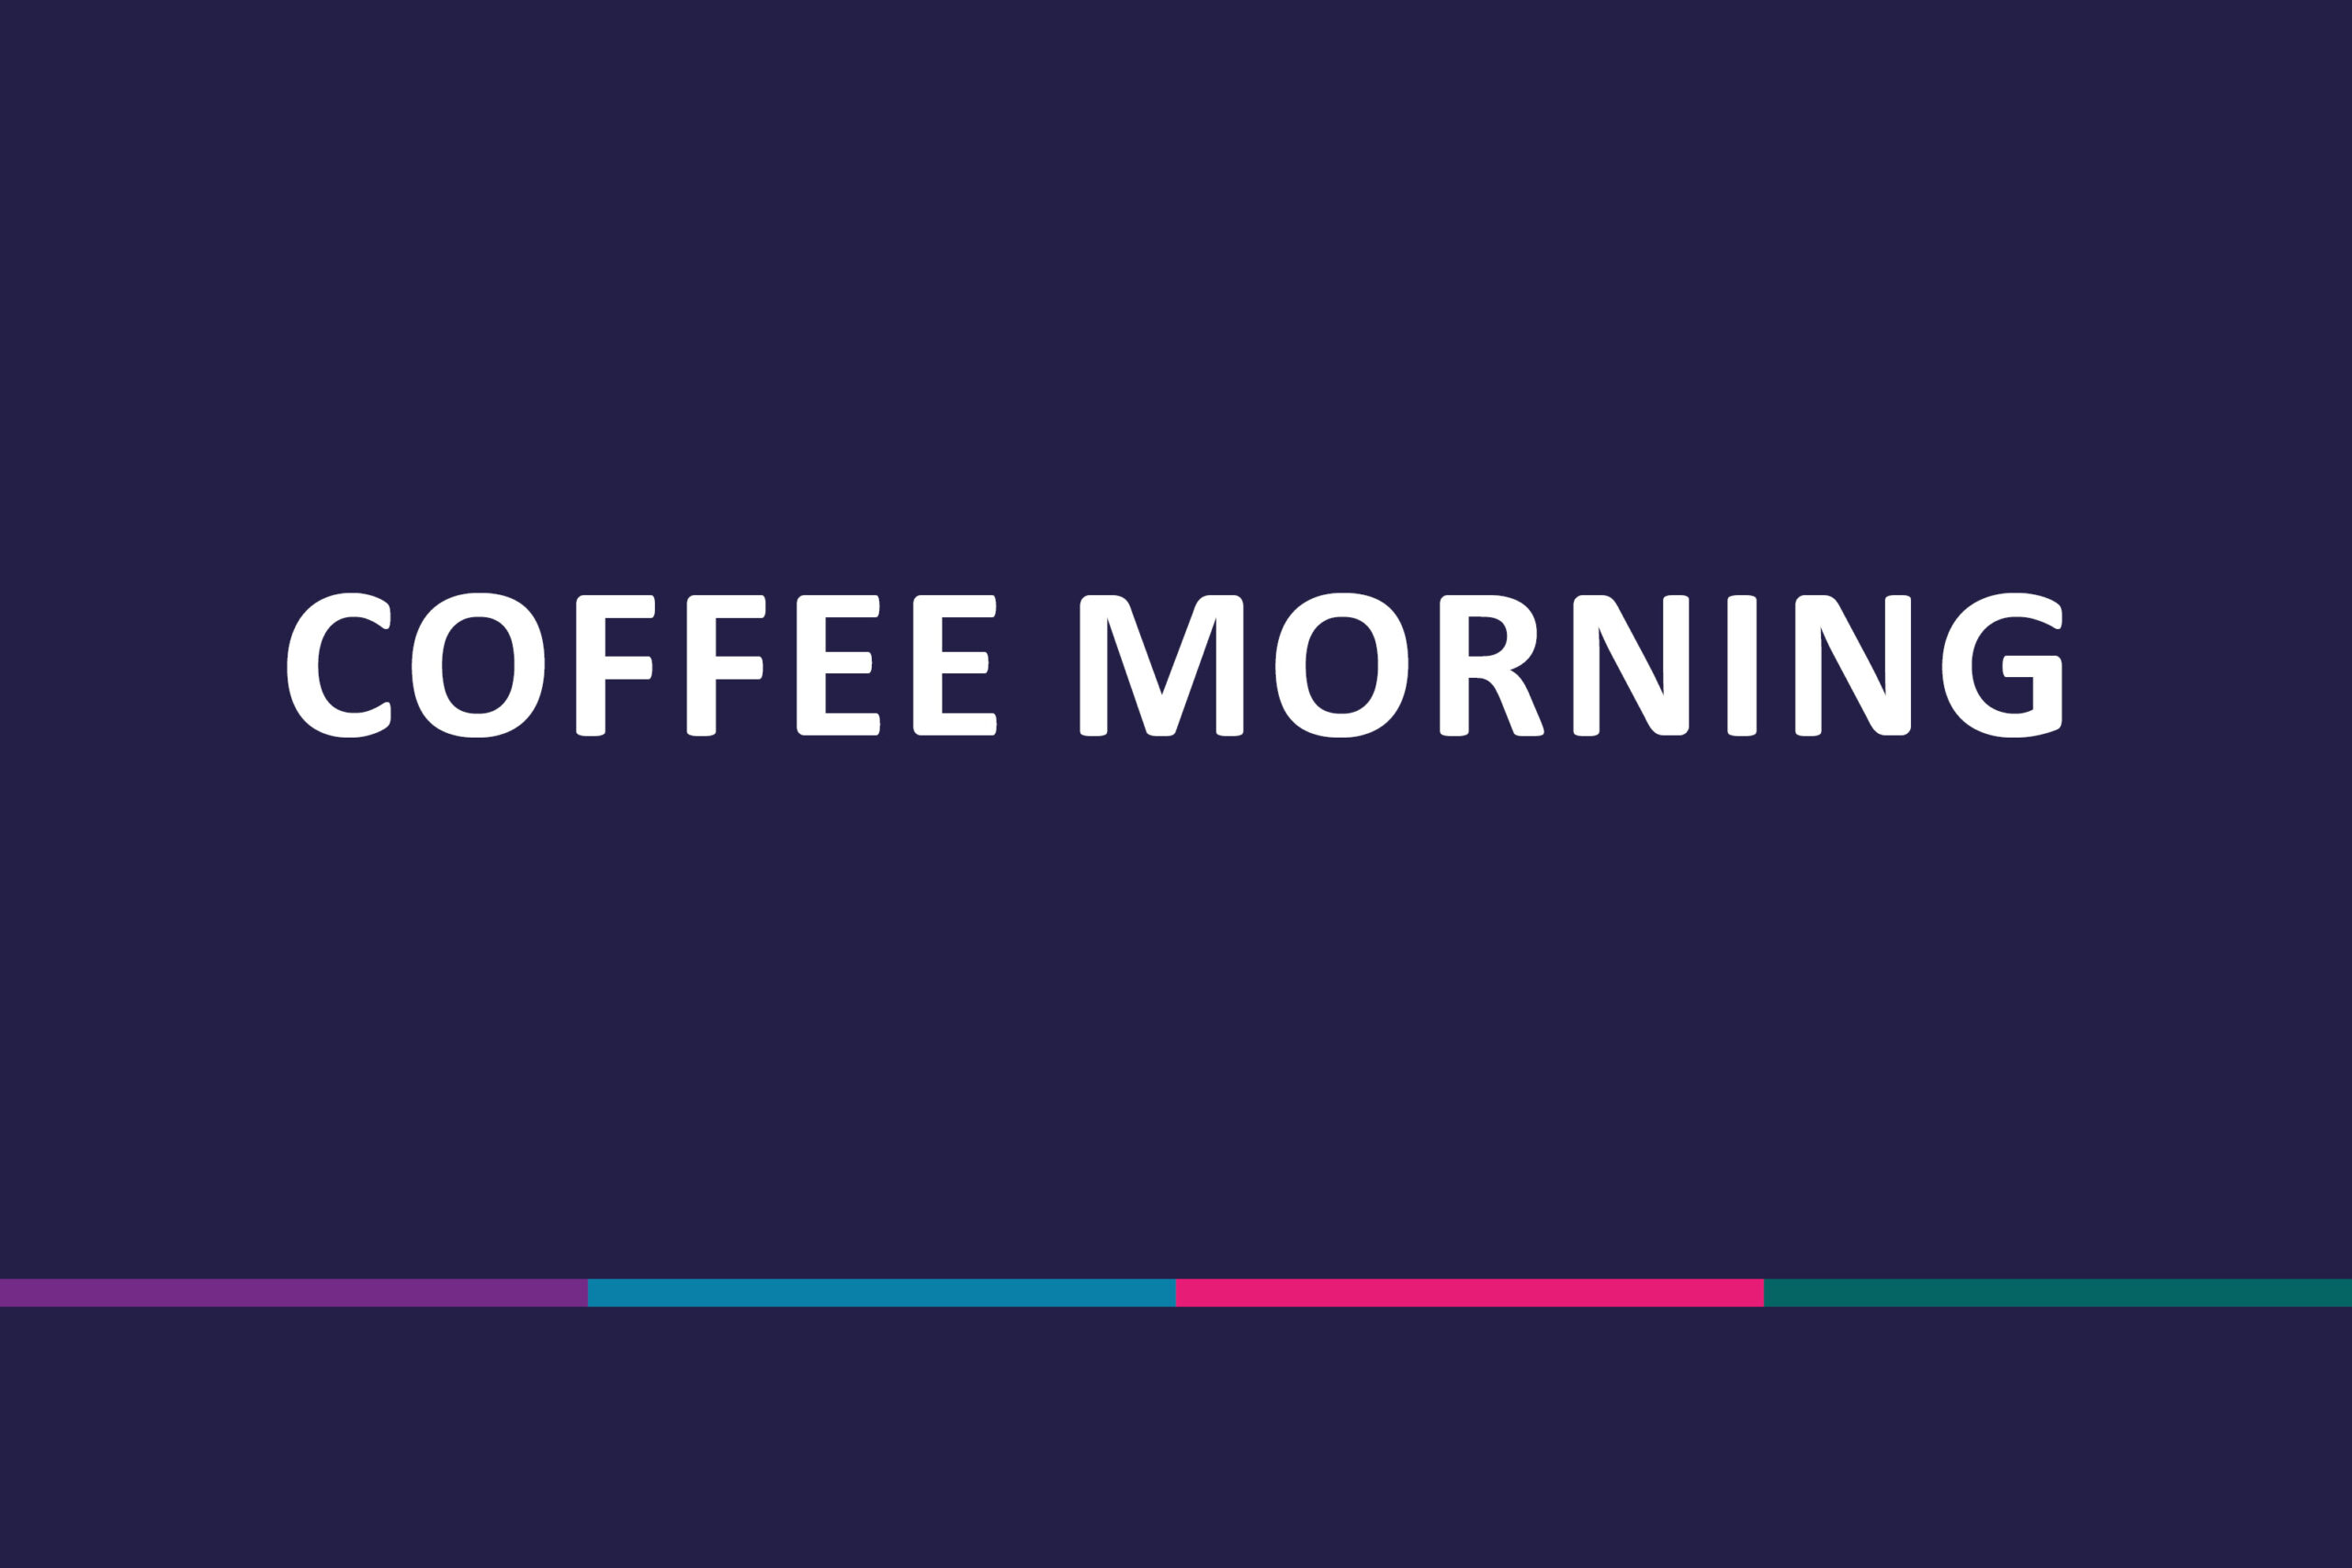 Coffee morning – Communication